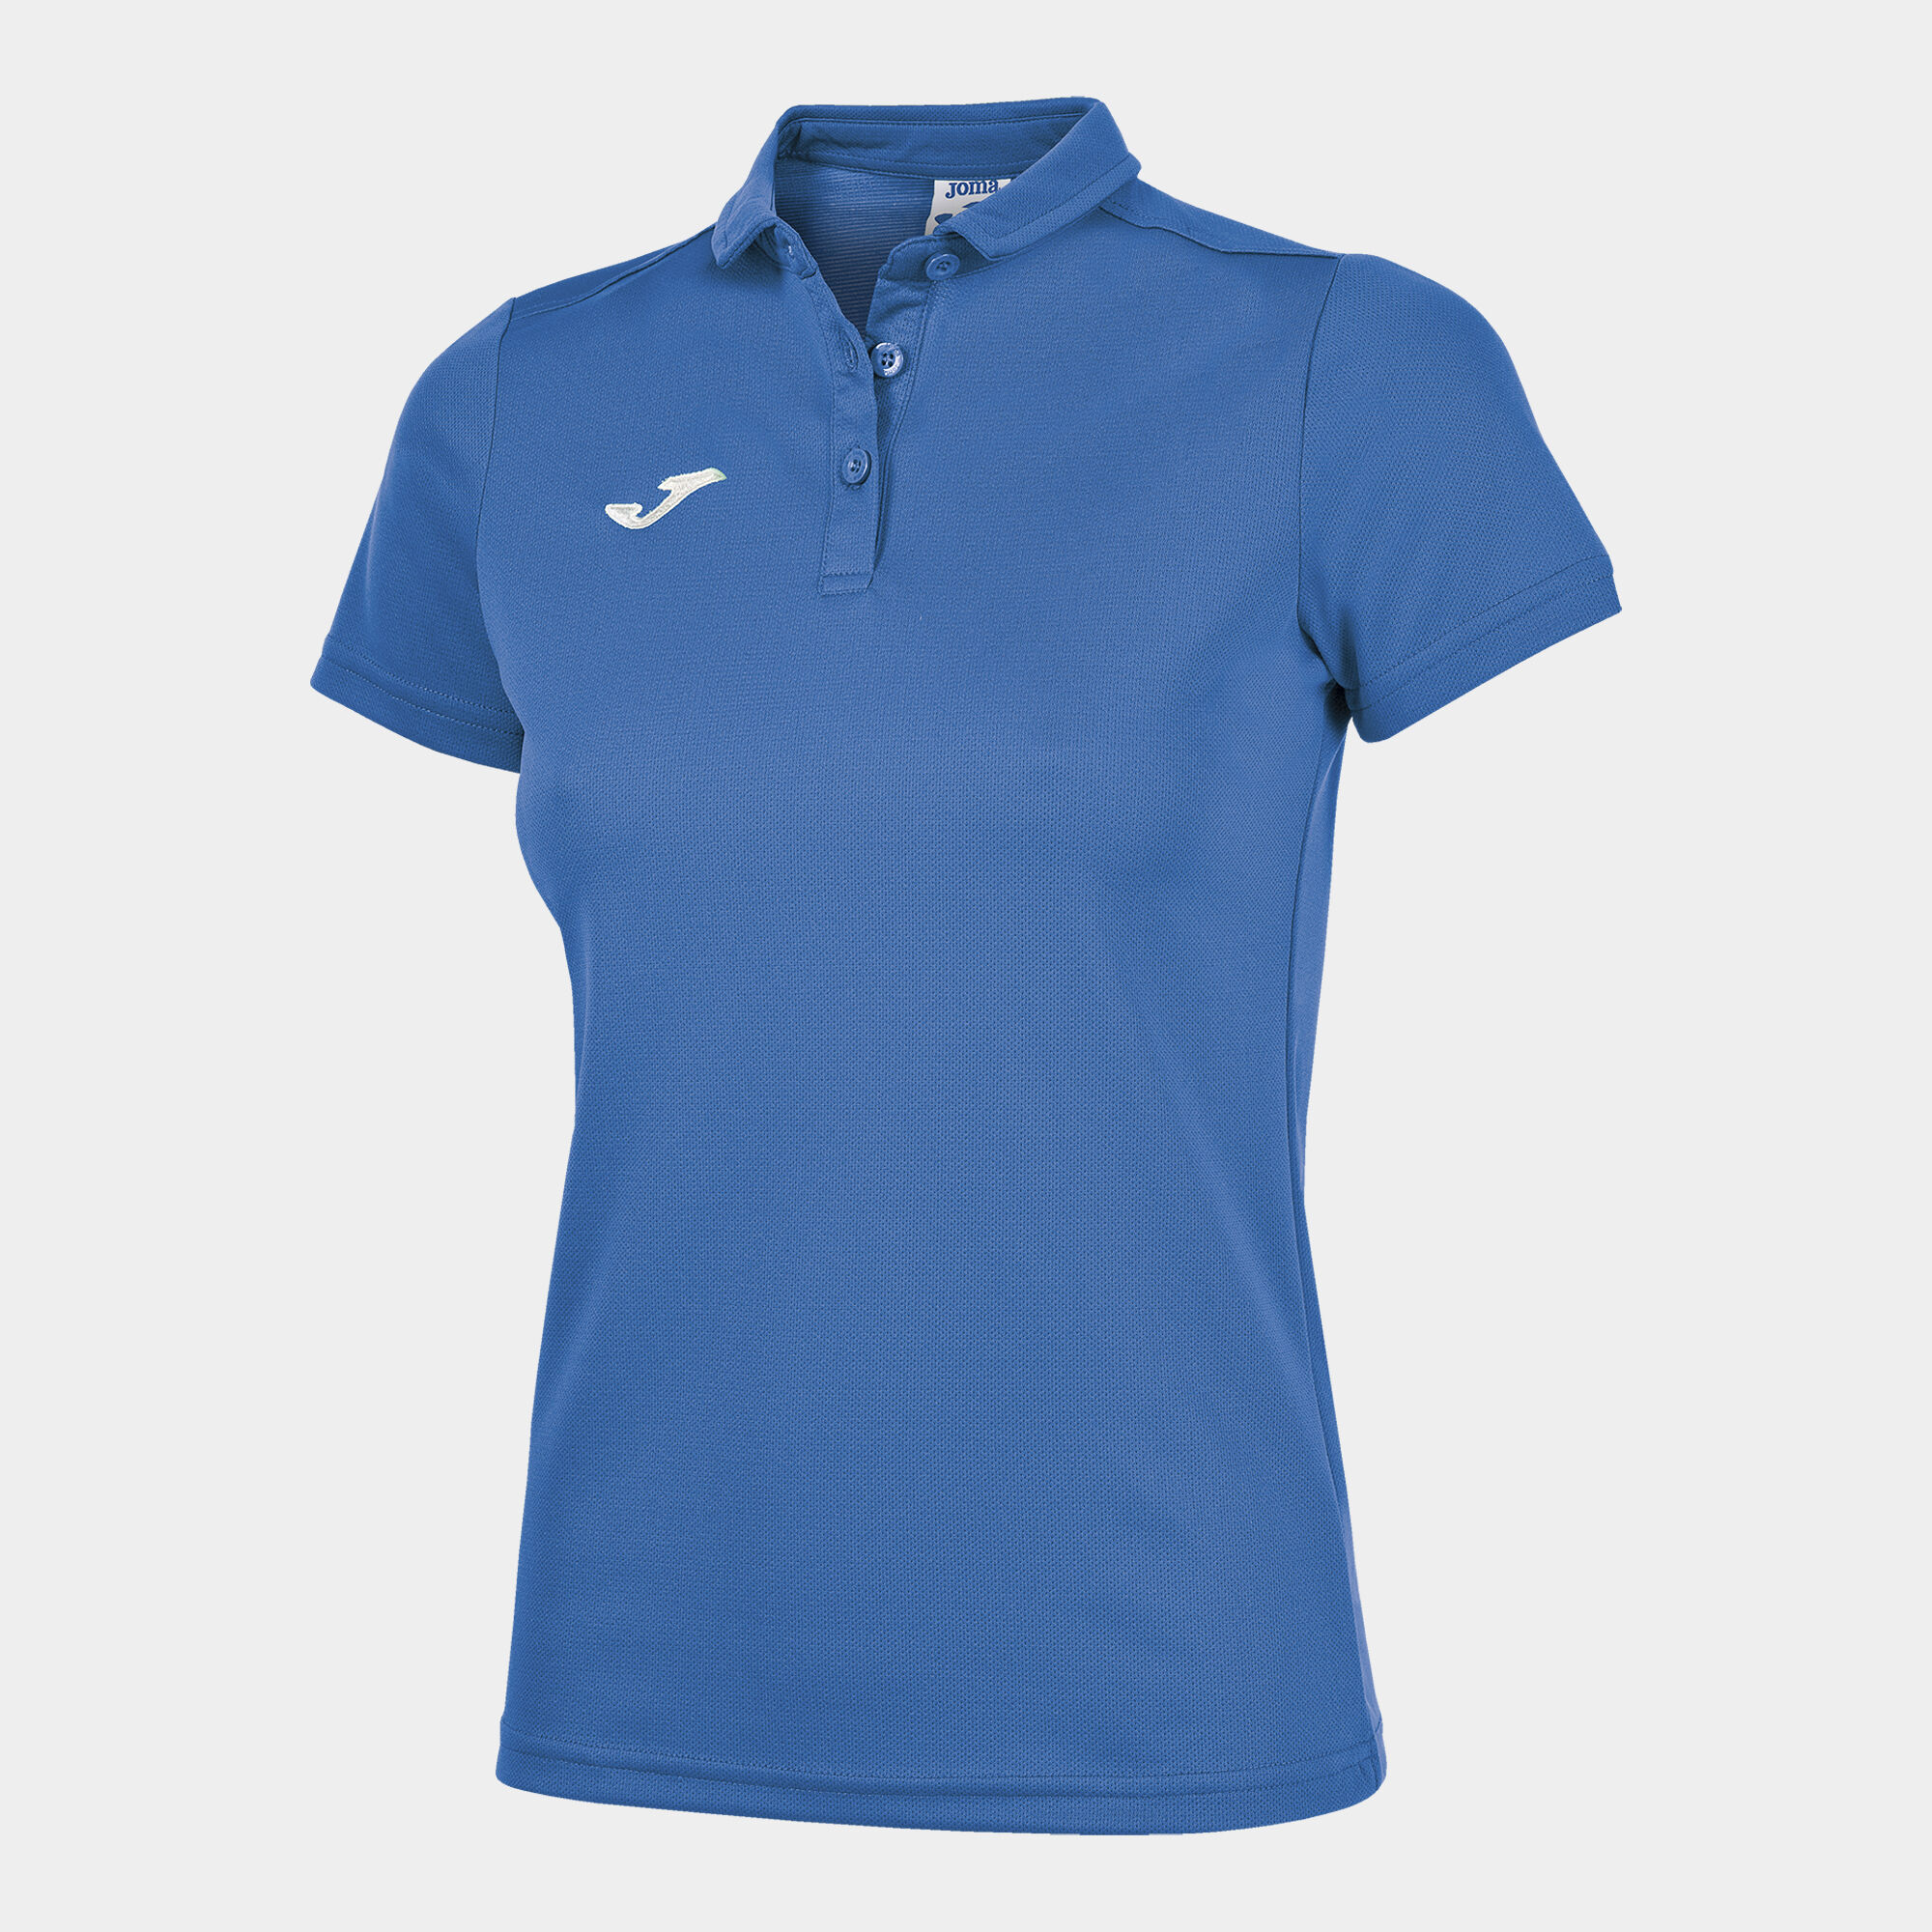 Polo shirt short-sleeve woman Hobby royal blue